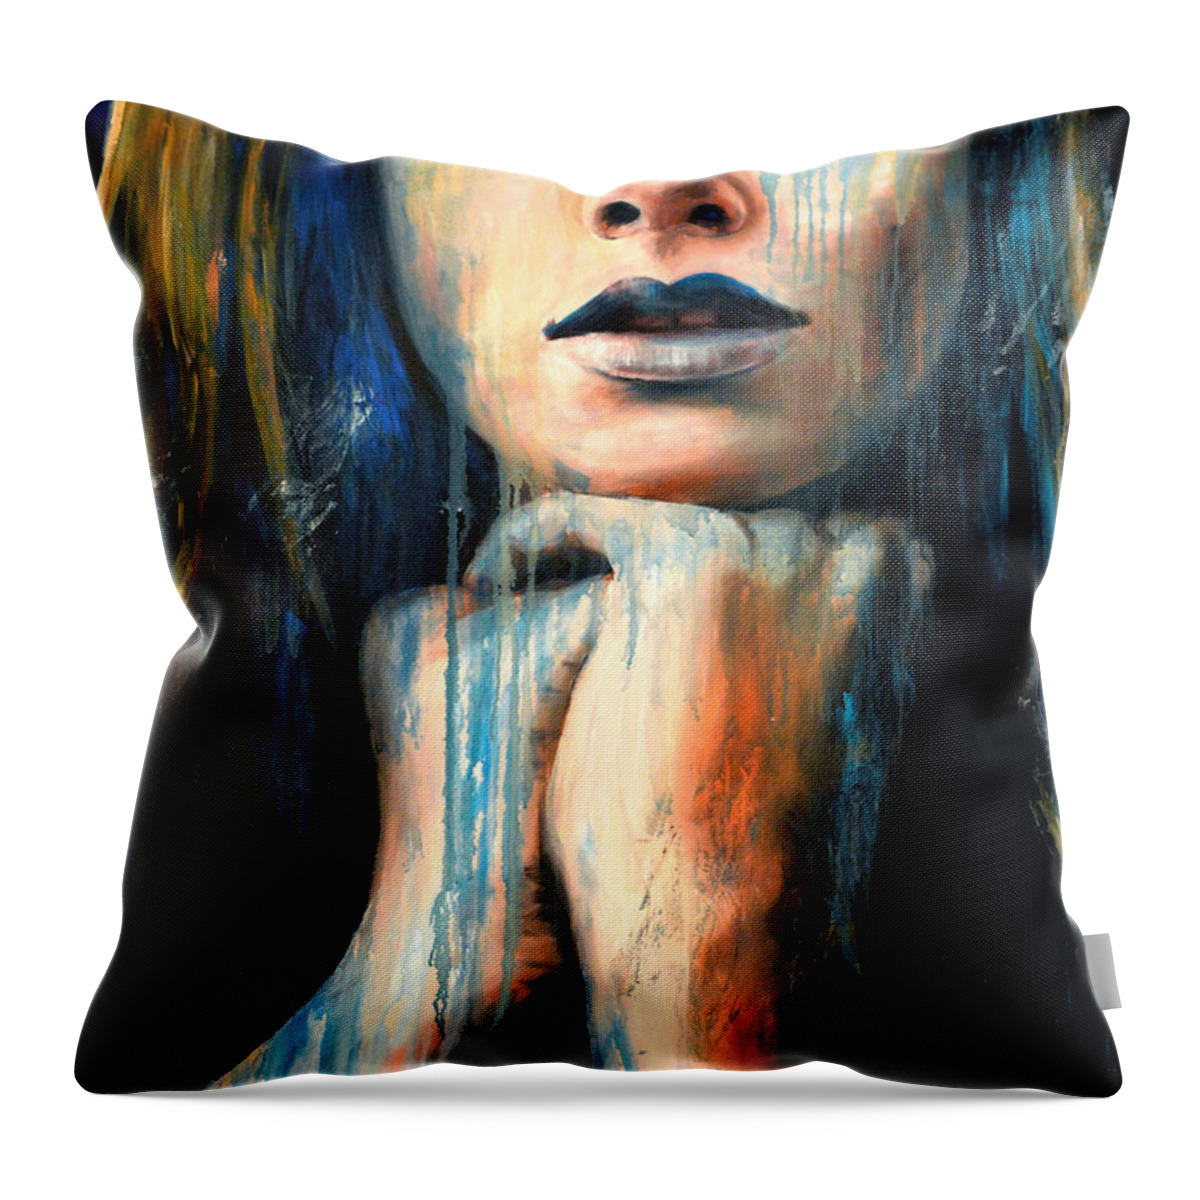 Portrait Throw Pillow featuring the painting Bluerain by Escha Van den bogerd